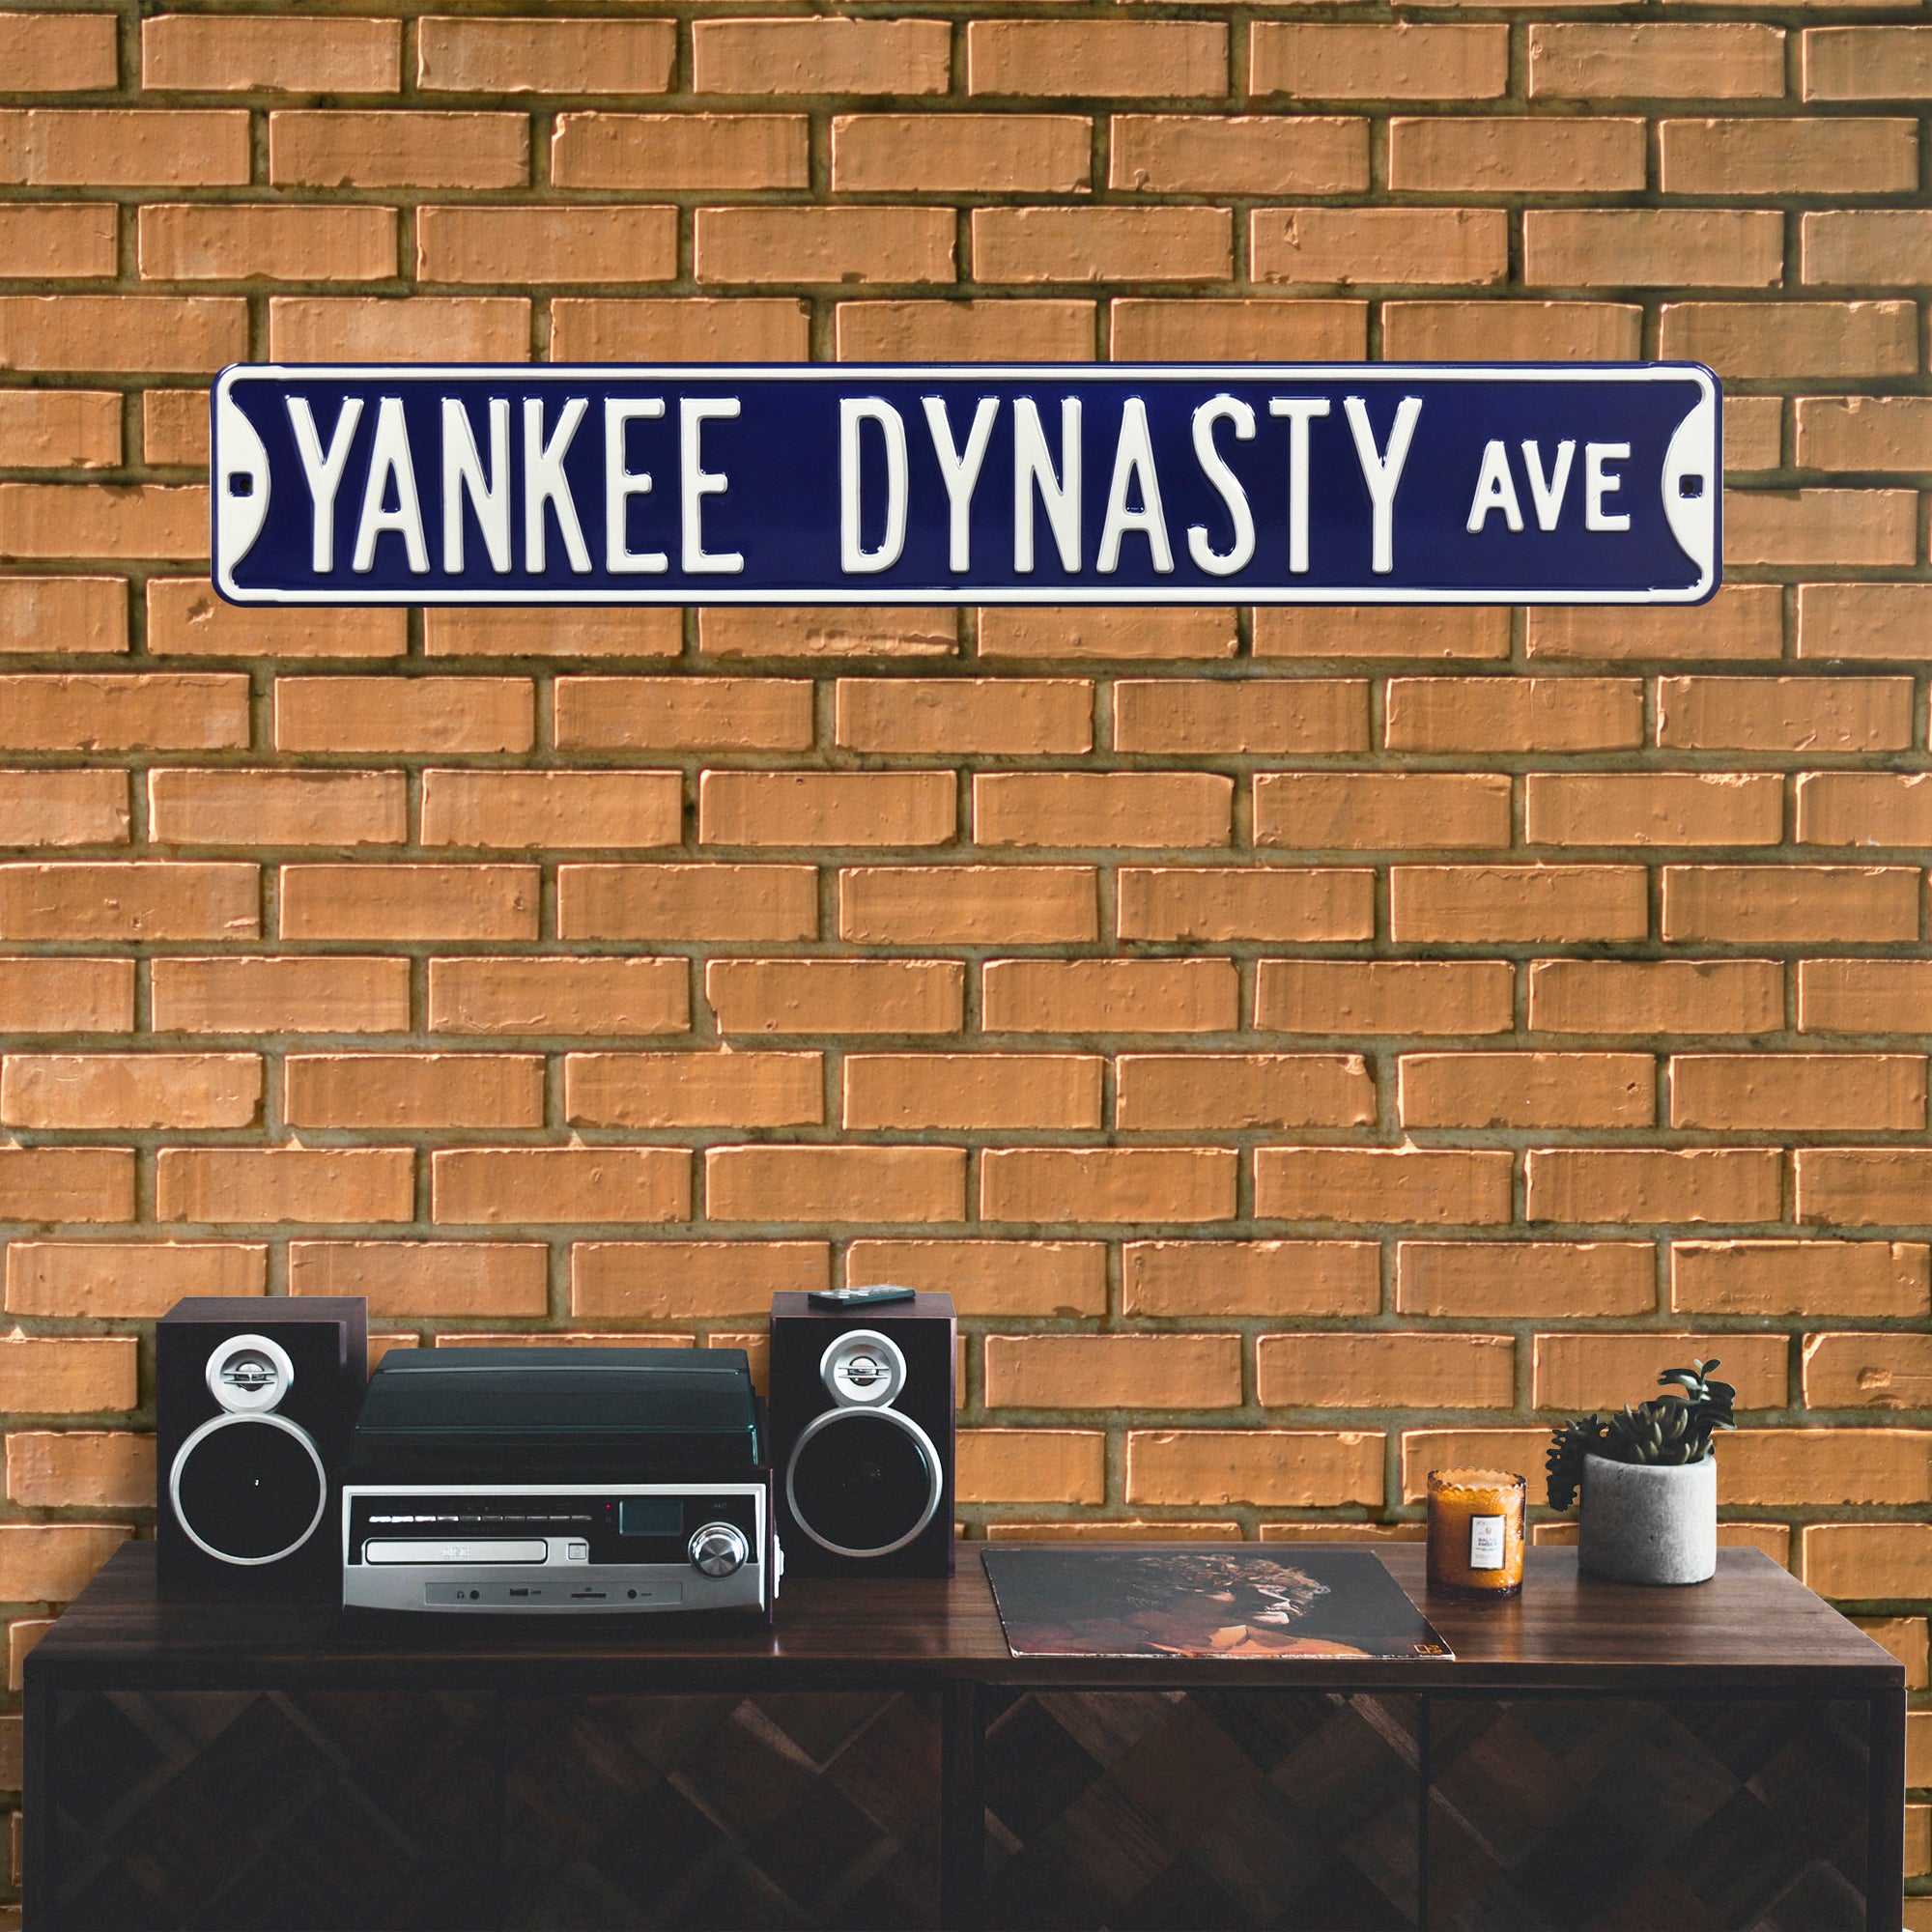 New York Yankees Steel Street Sign-YANKEE DYNASTY DR 36" W x 6" H by Fathead